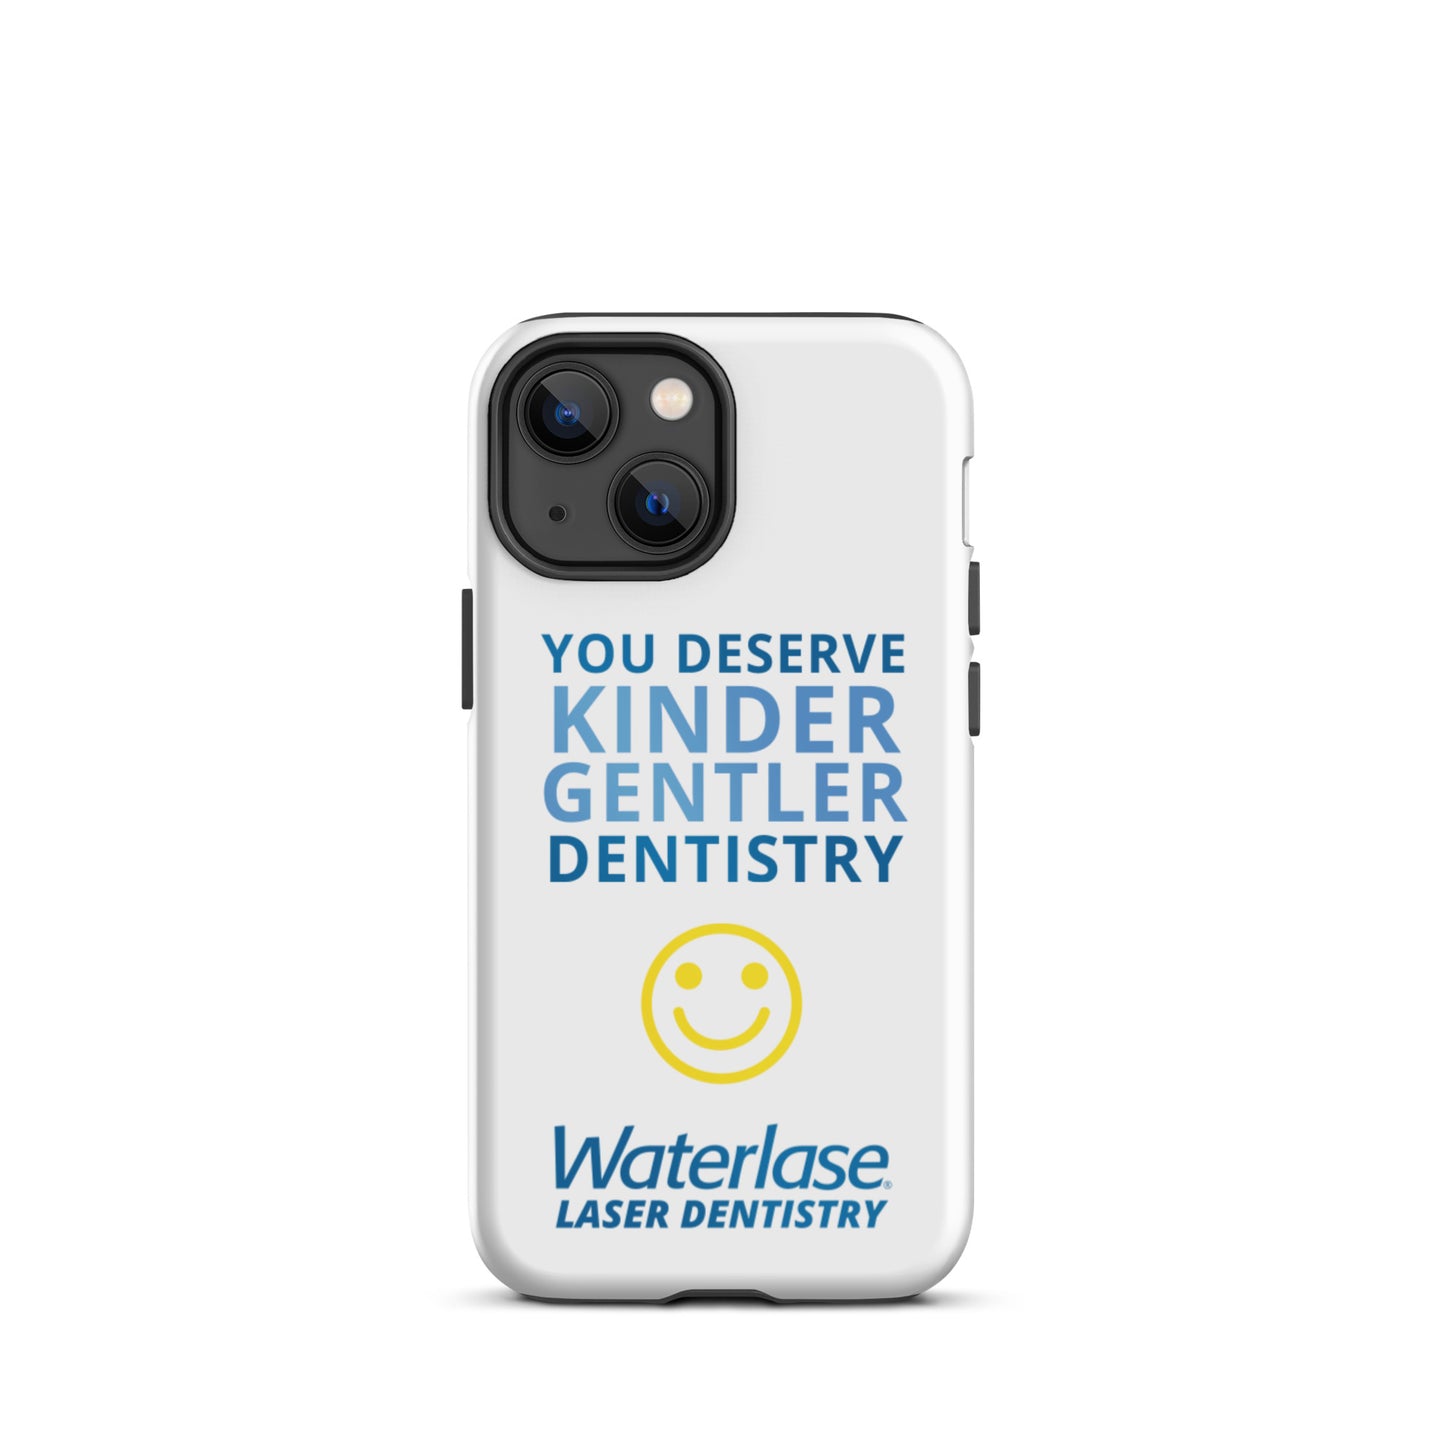 Kinder, Gentler Dentistry but a Tough iPhone Case